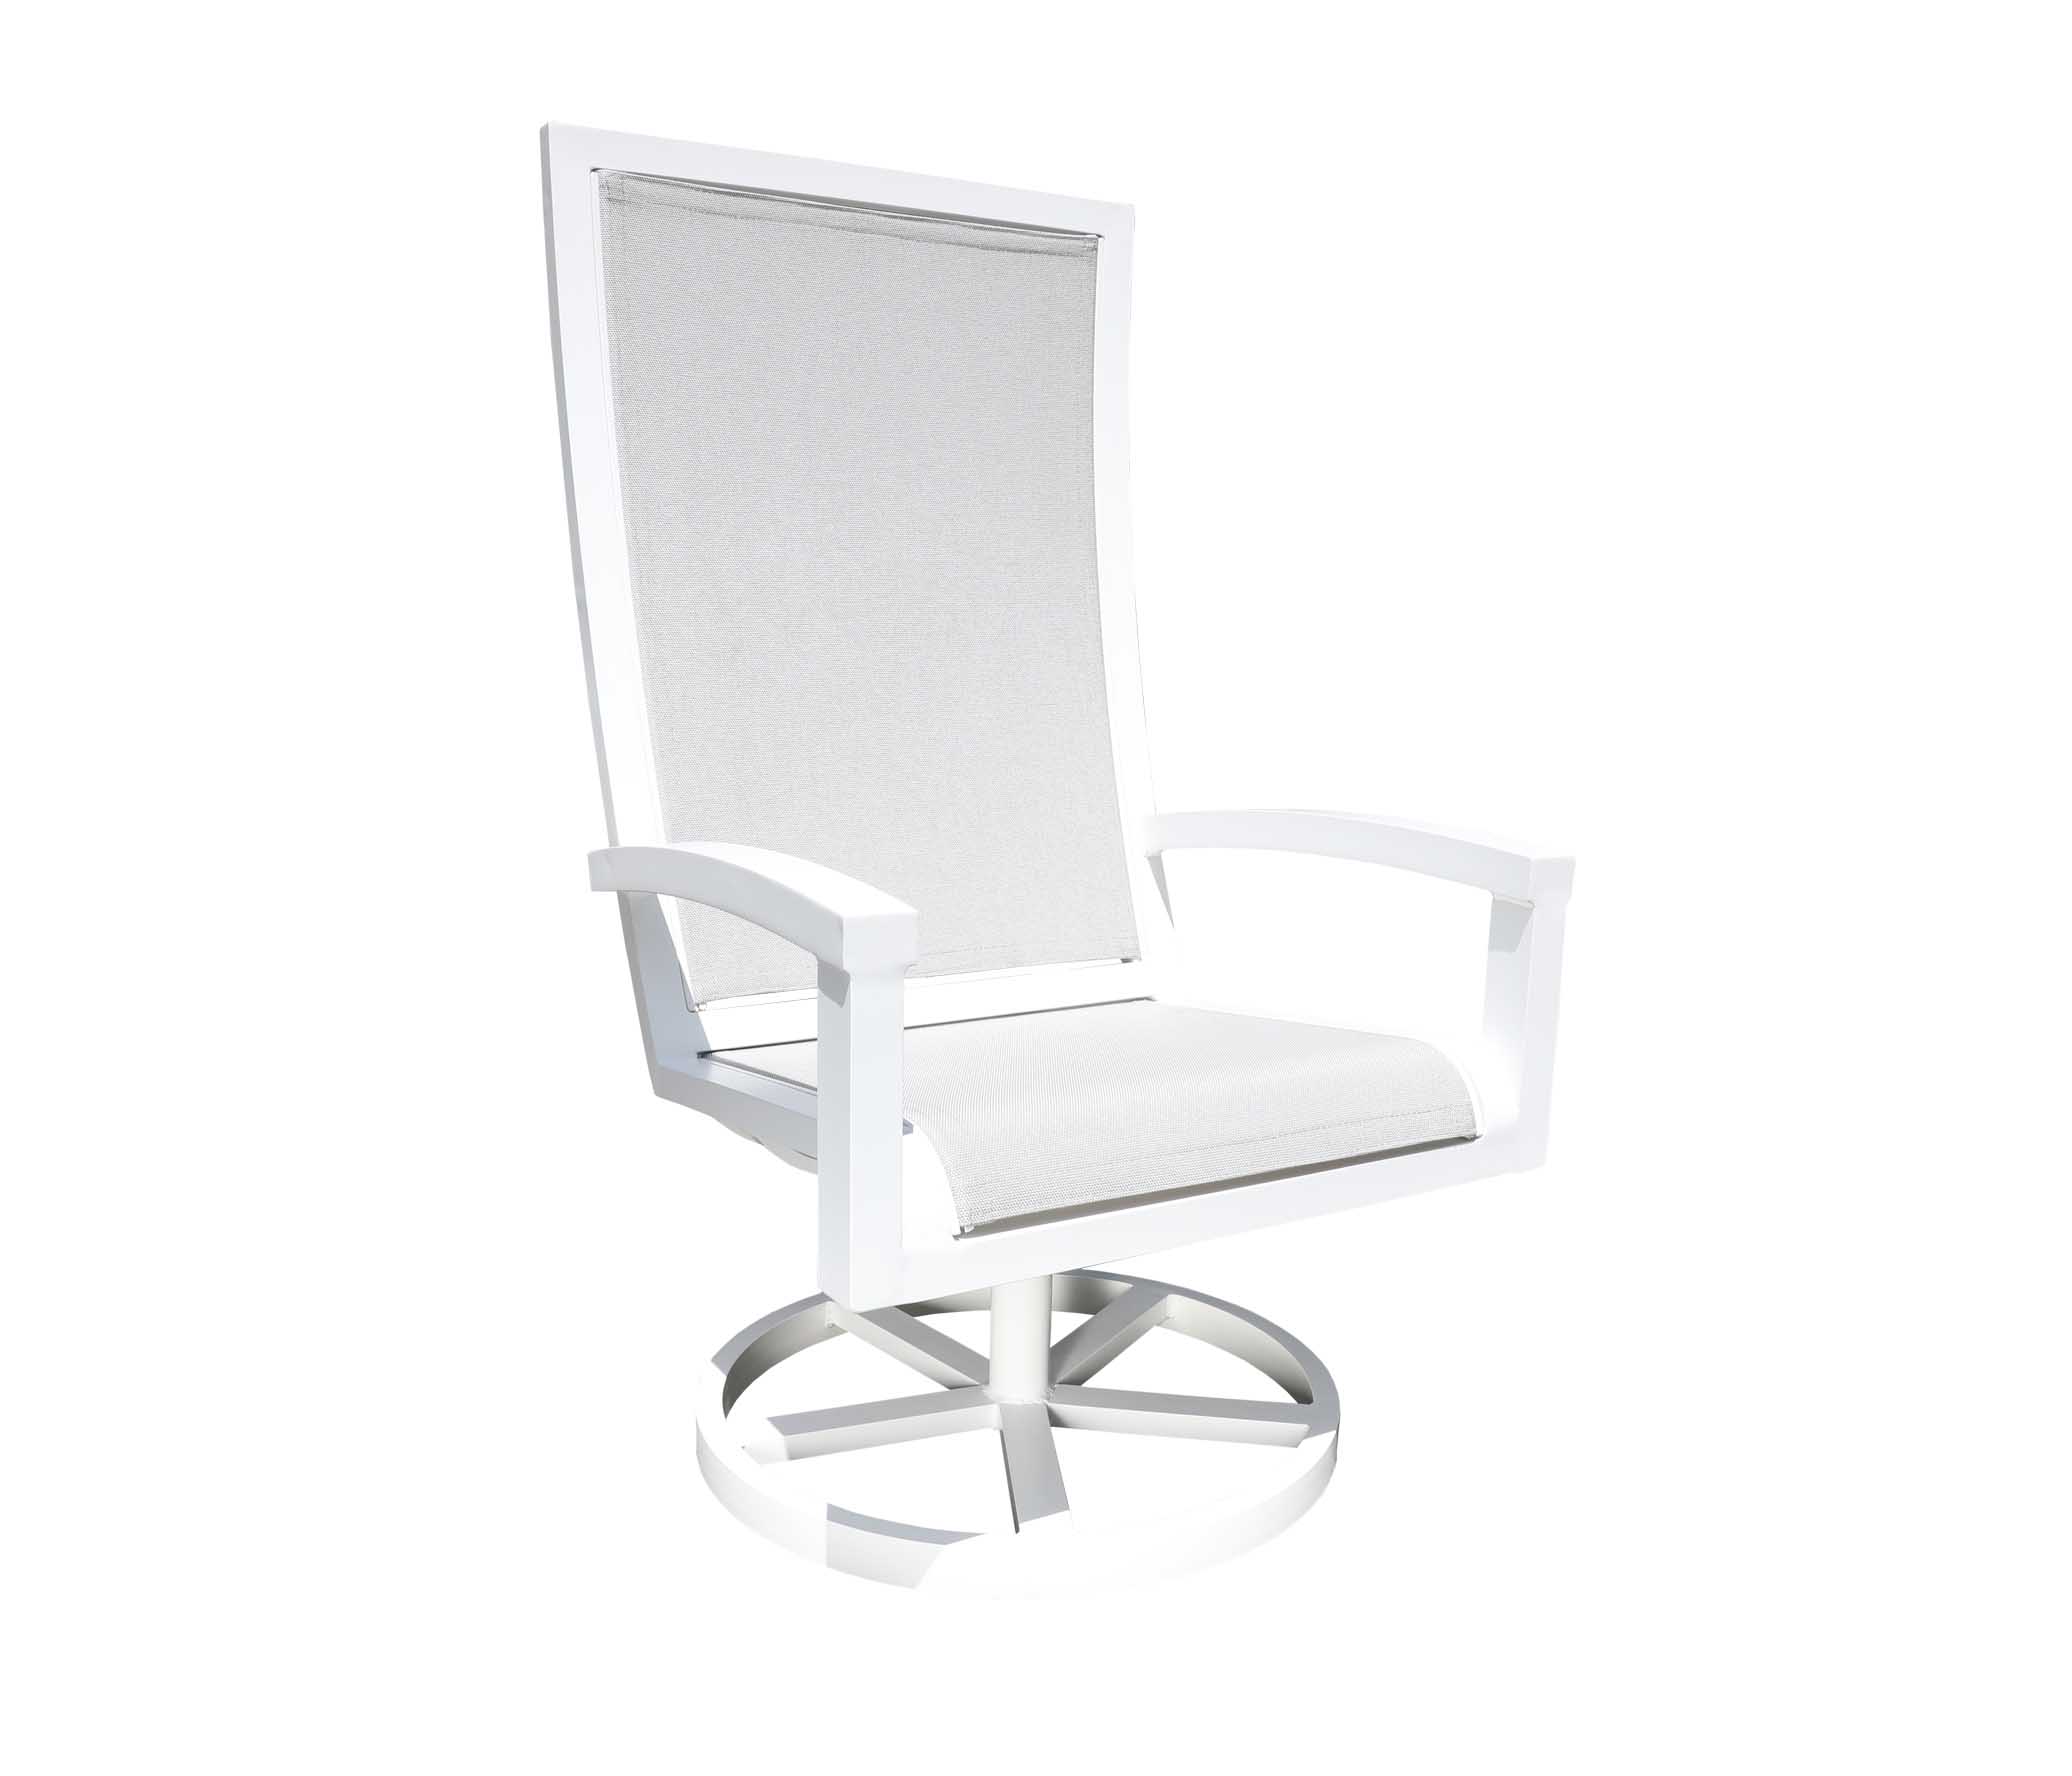 Millcroft Wing Chair